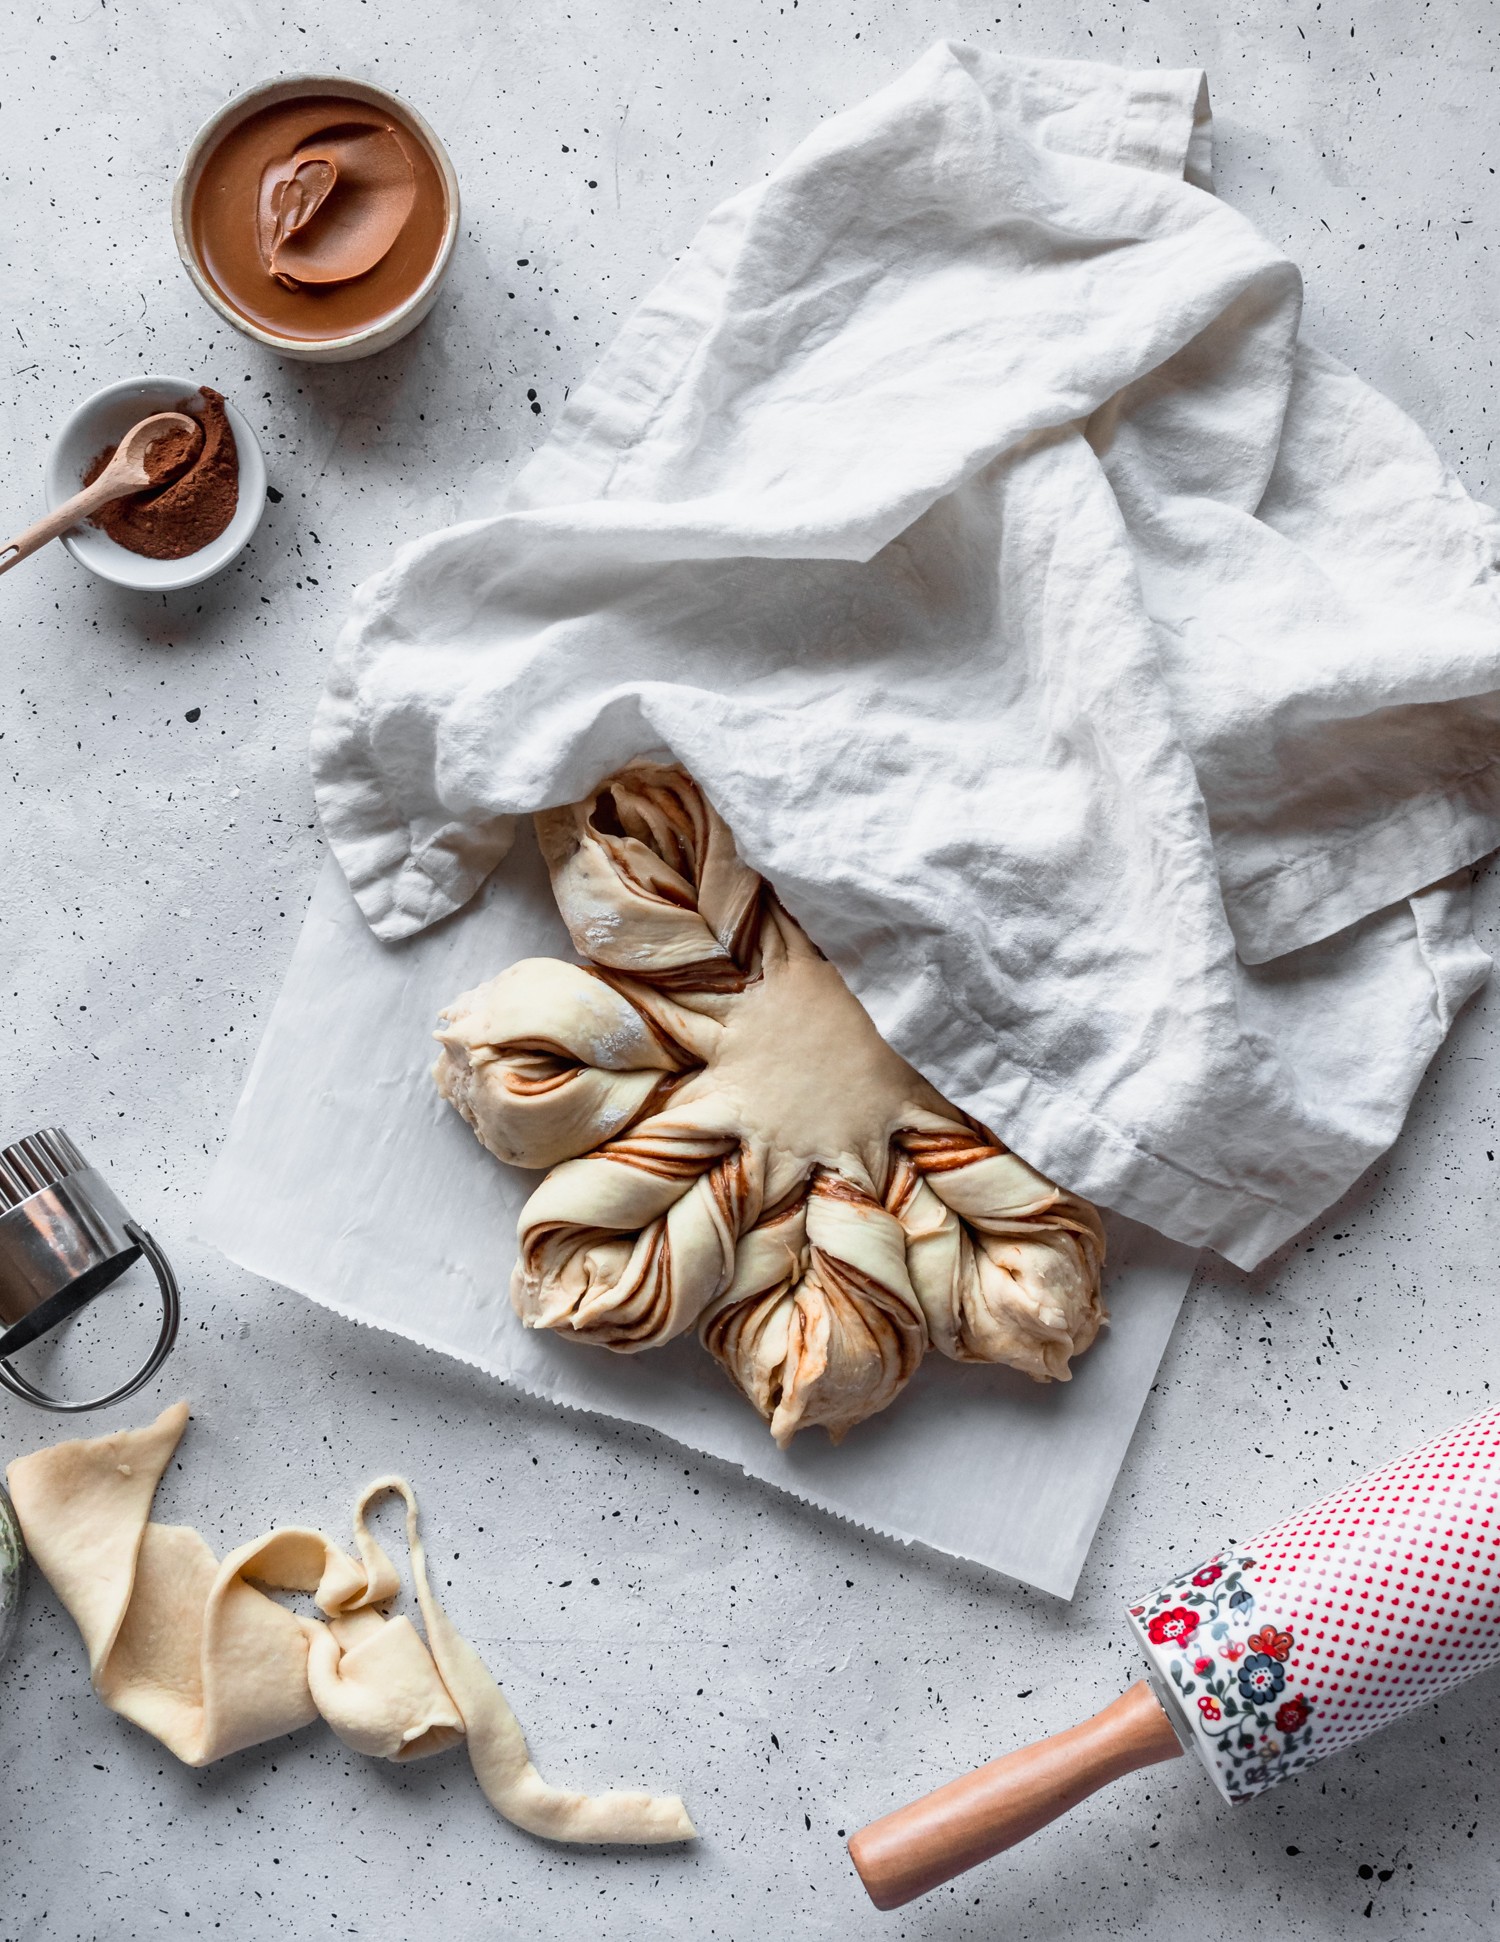 How long should sweet roll dough rise?